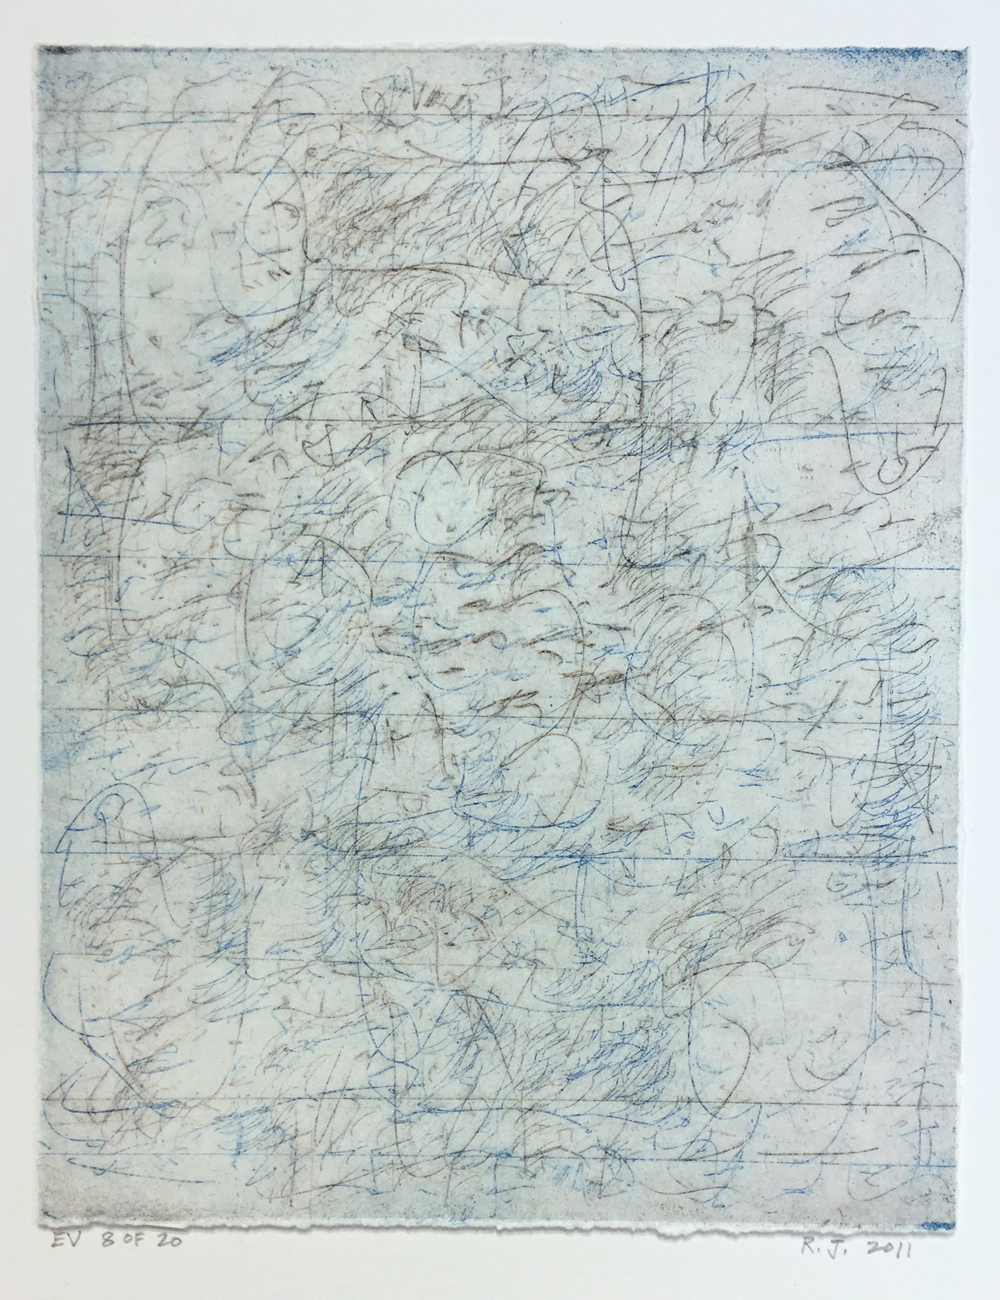 Robert C. Jones, EV, 2011, edition 8/20, etching, 10 x 7.75 inches, $600.